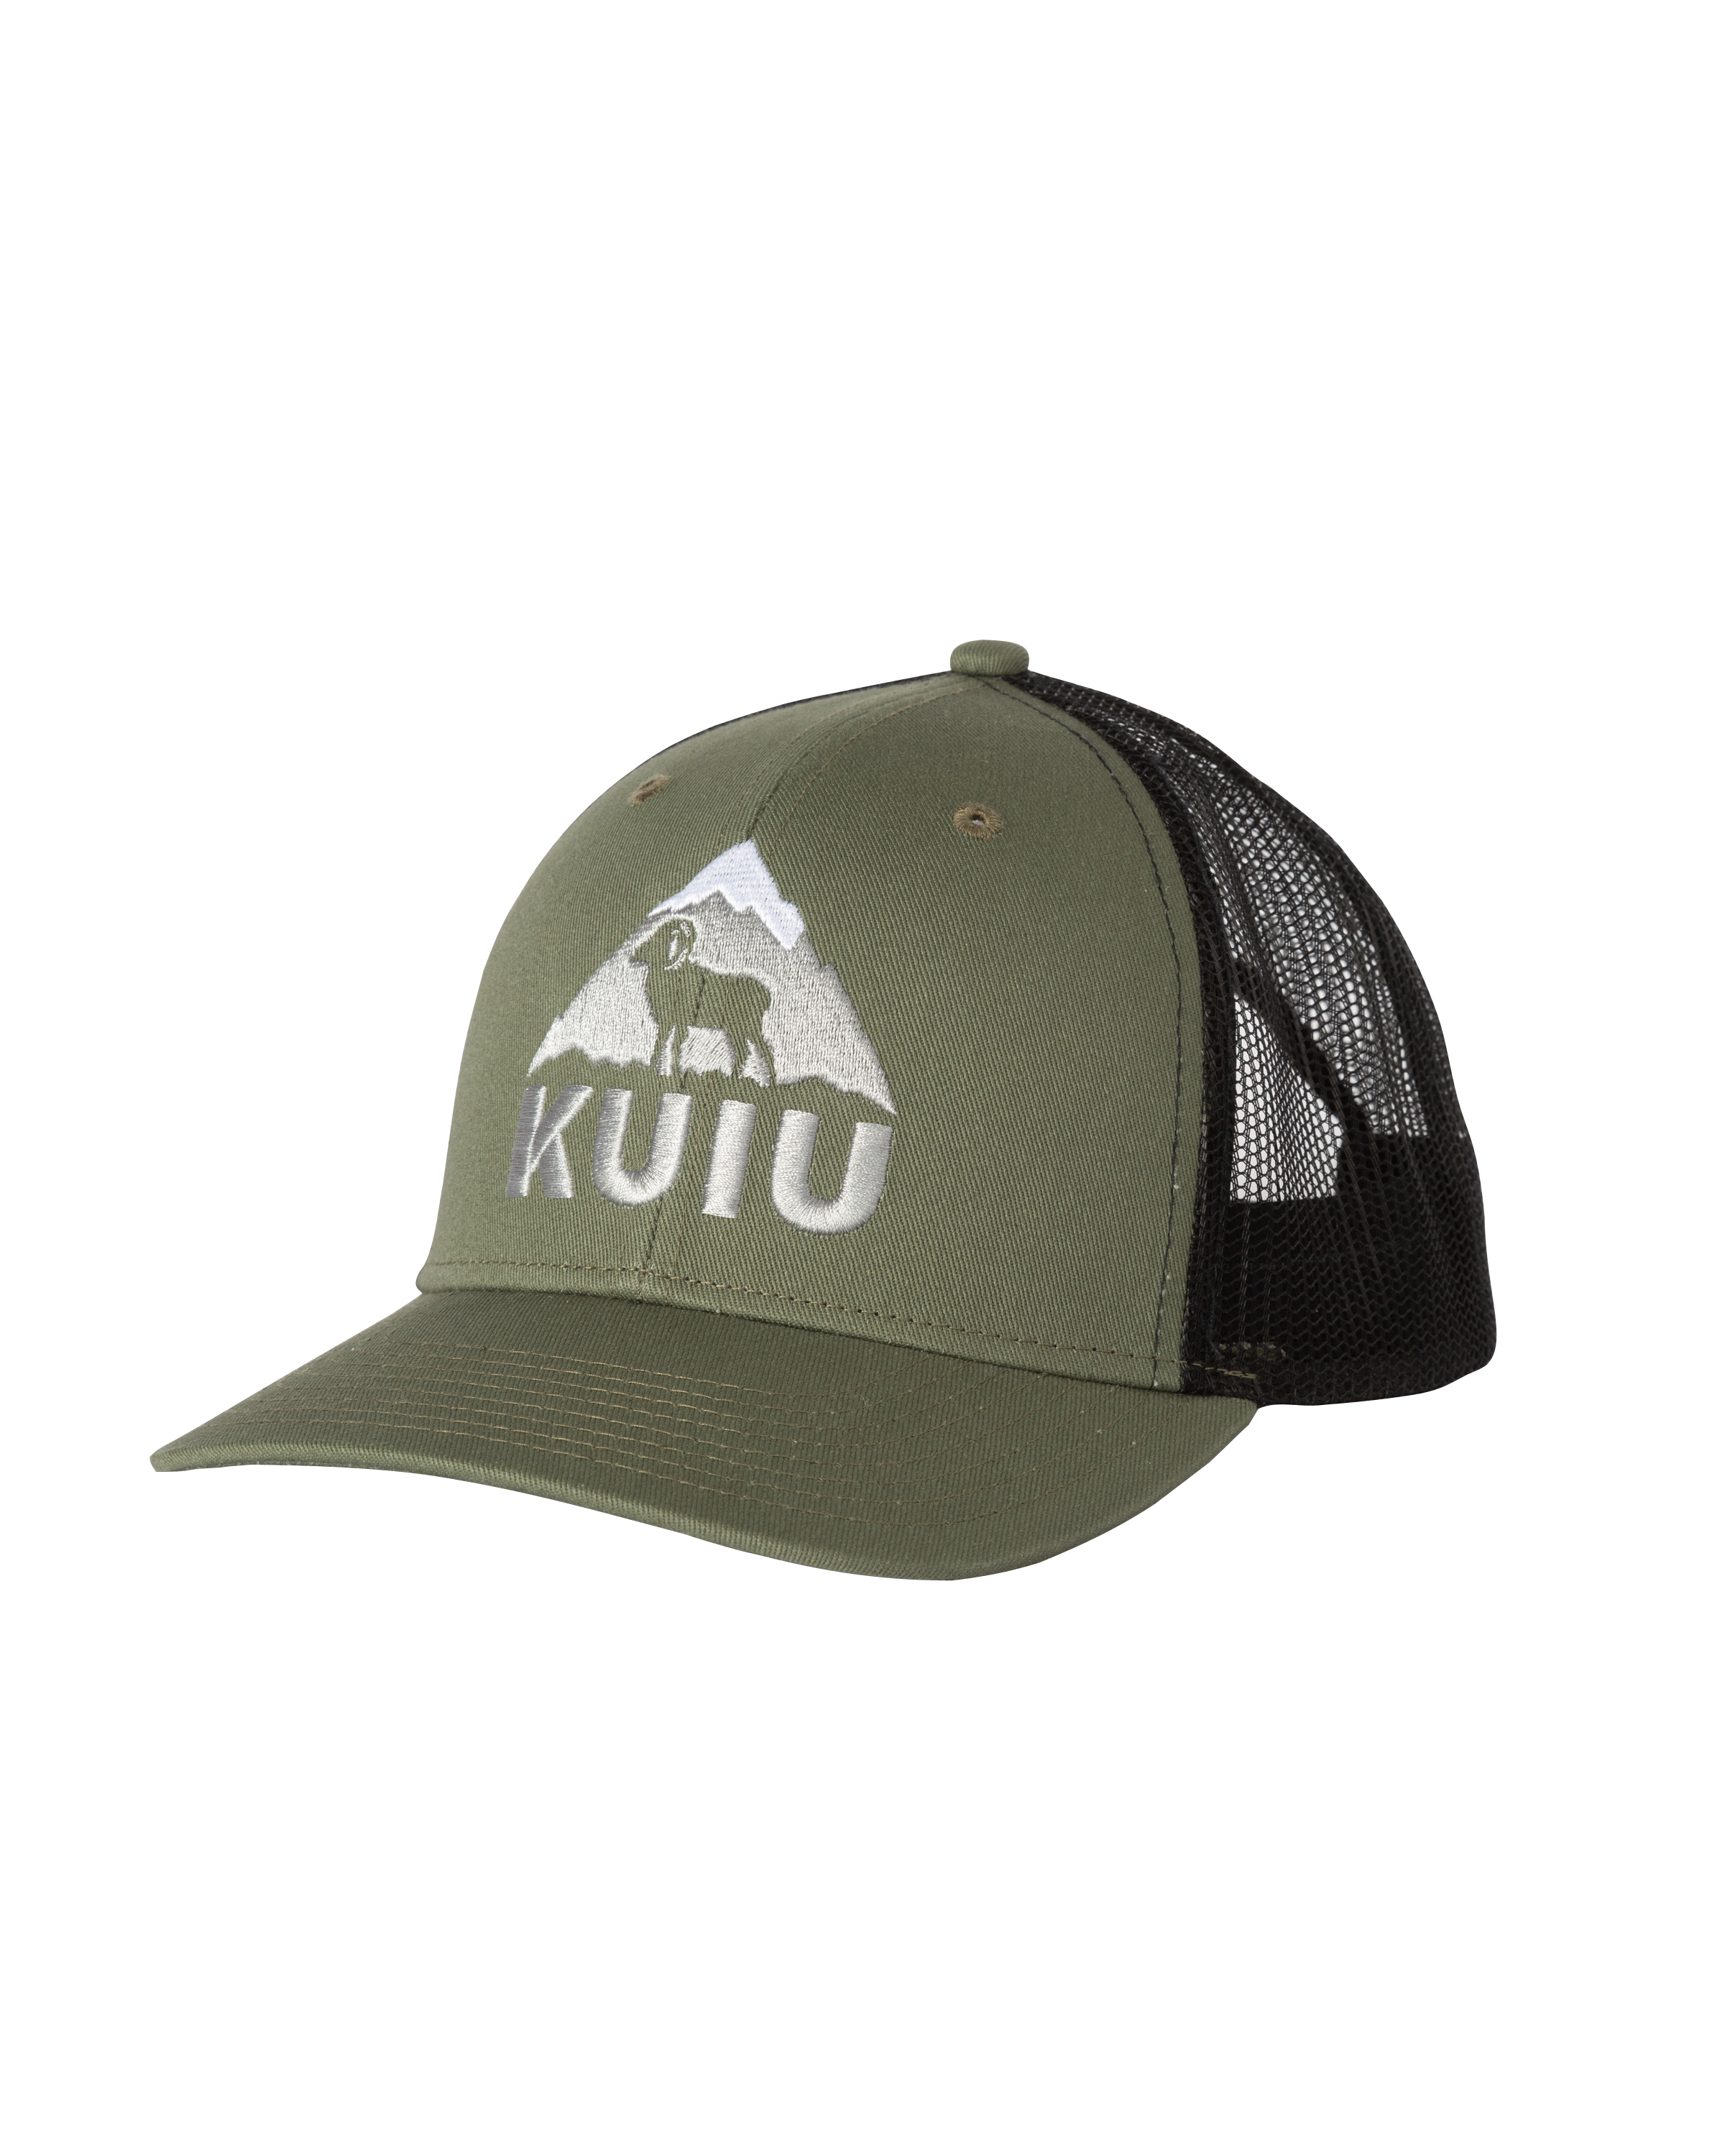 KUIU Bighorn Trucker Hat in Olive